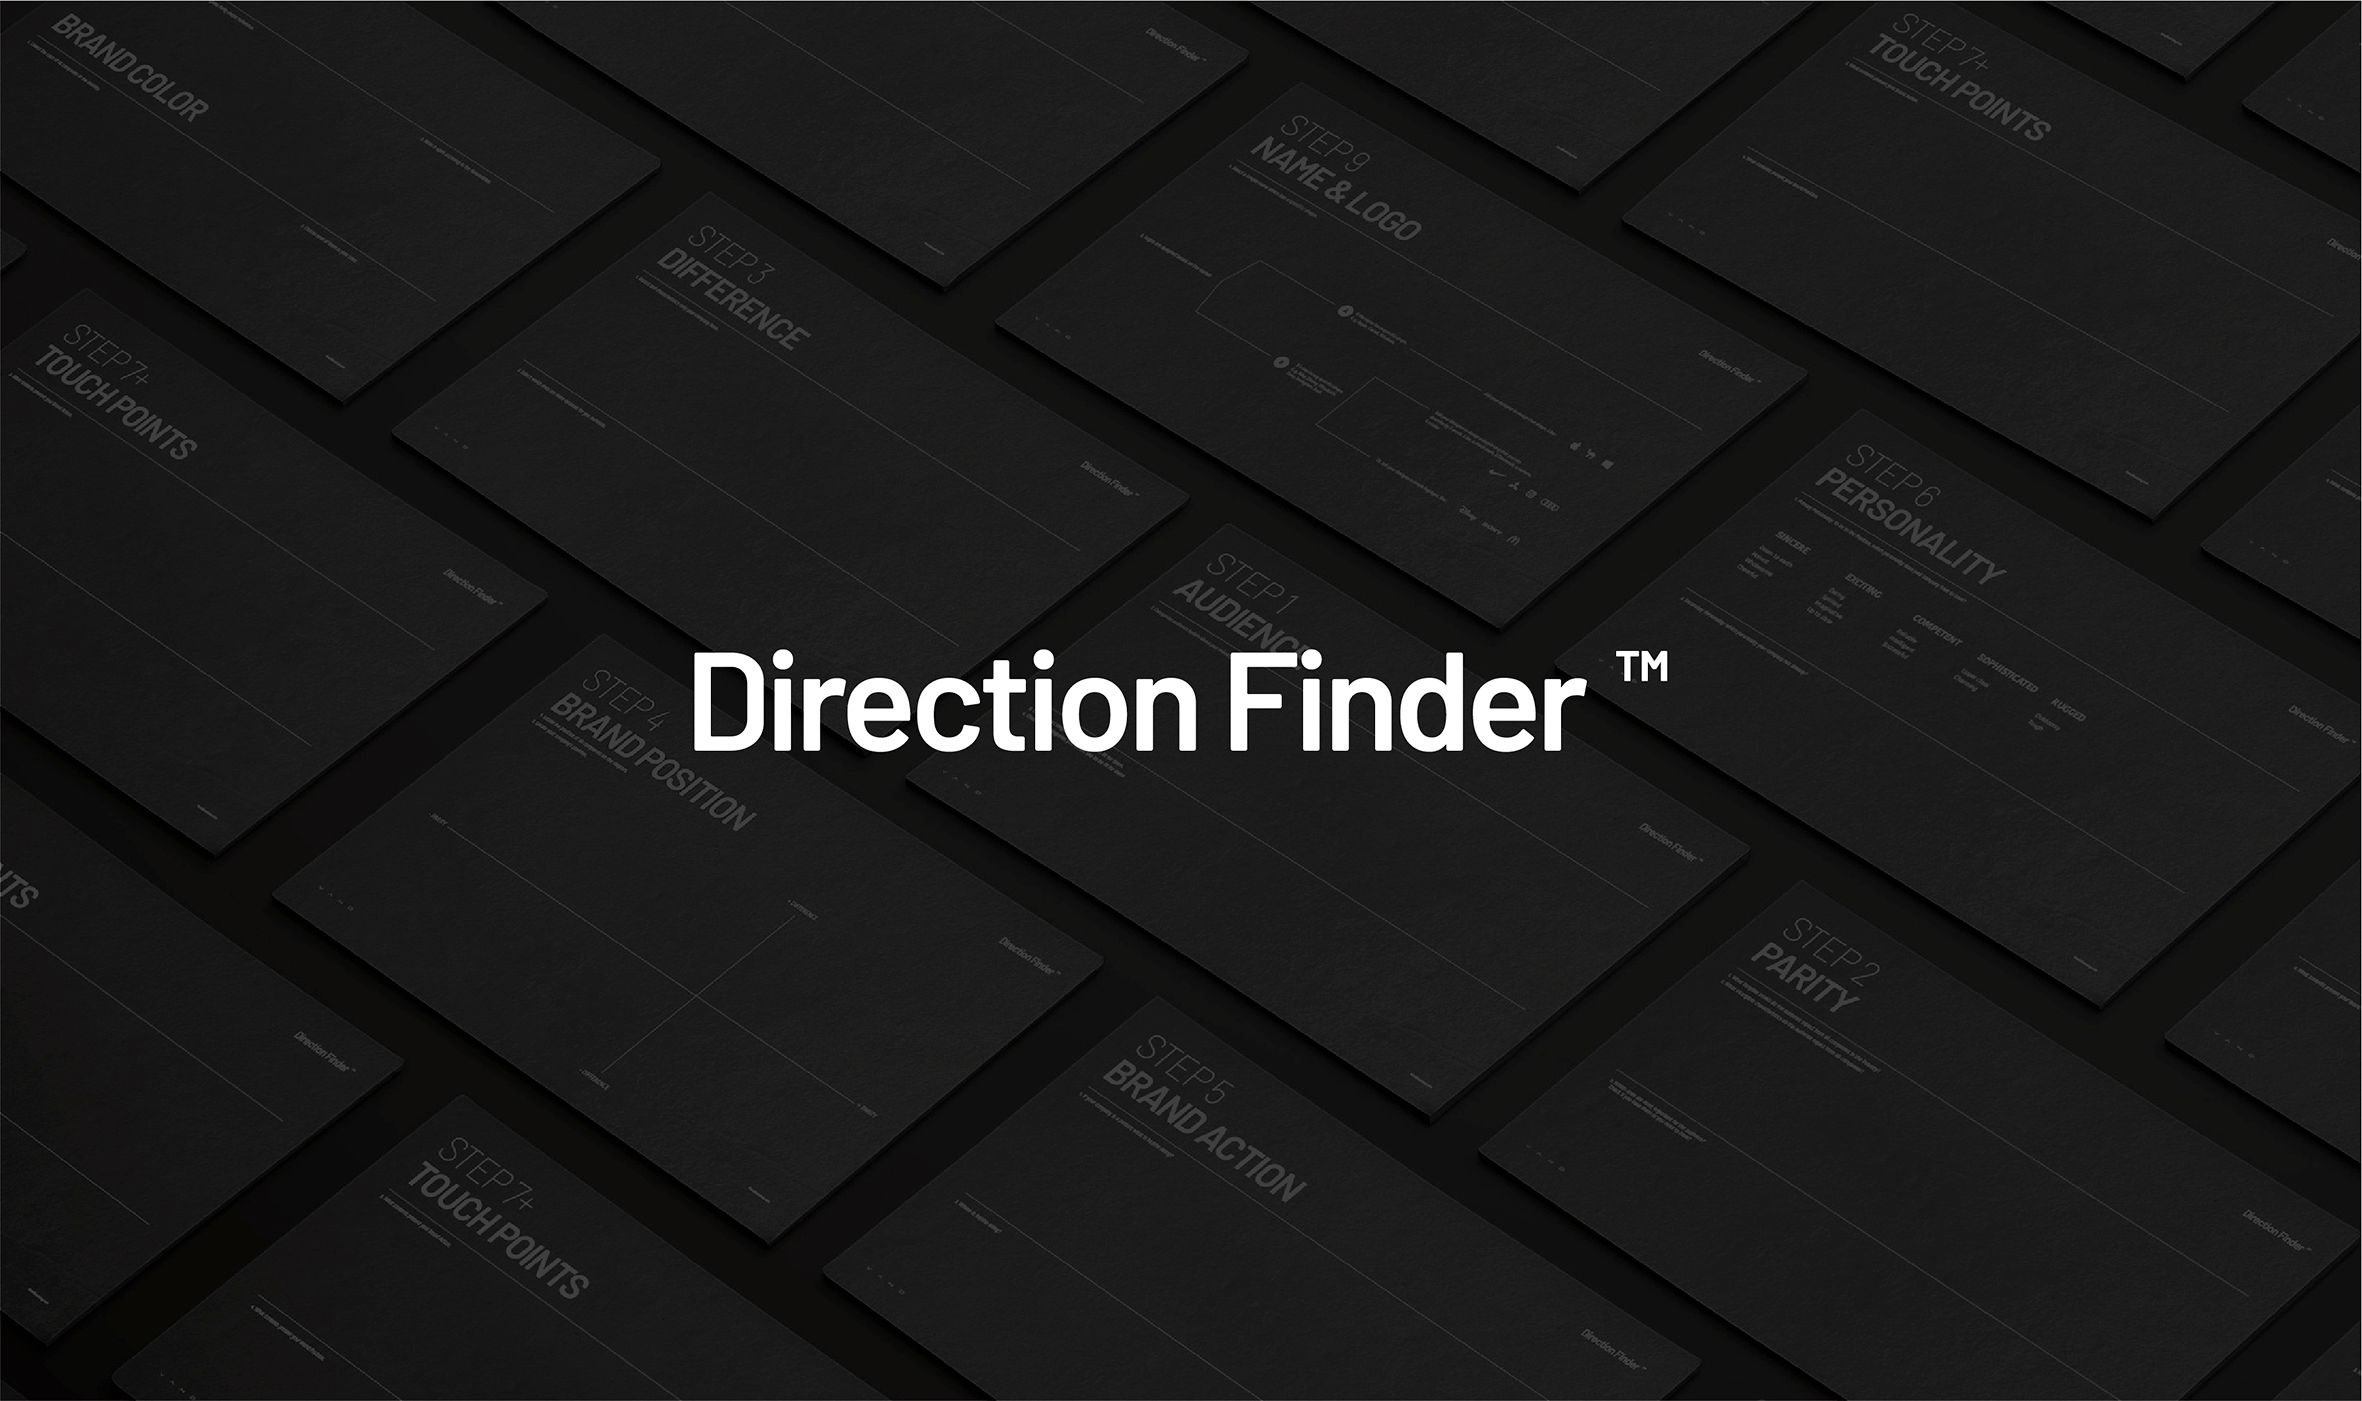 Direction Finder پکیجی برای مدیران برندها